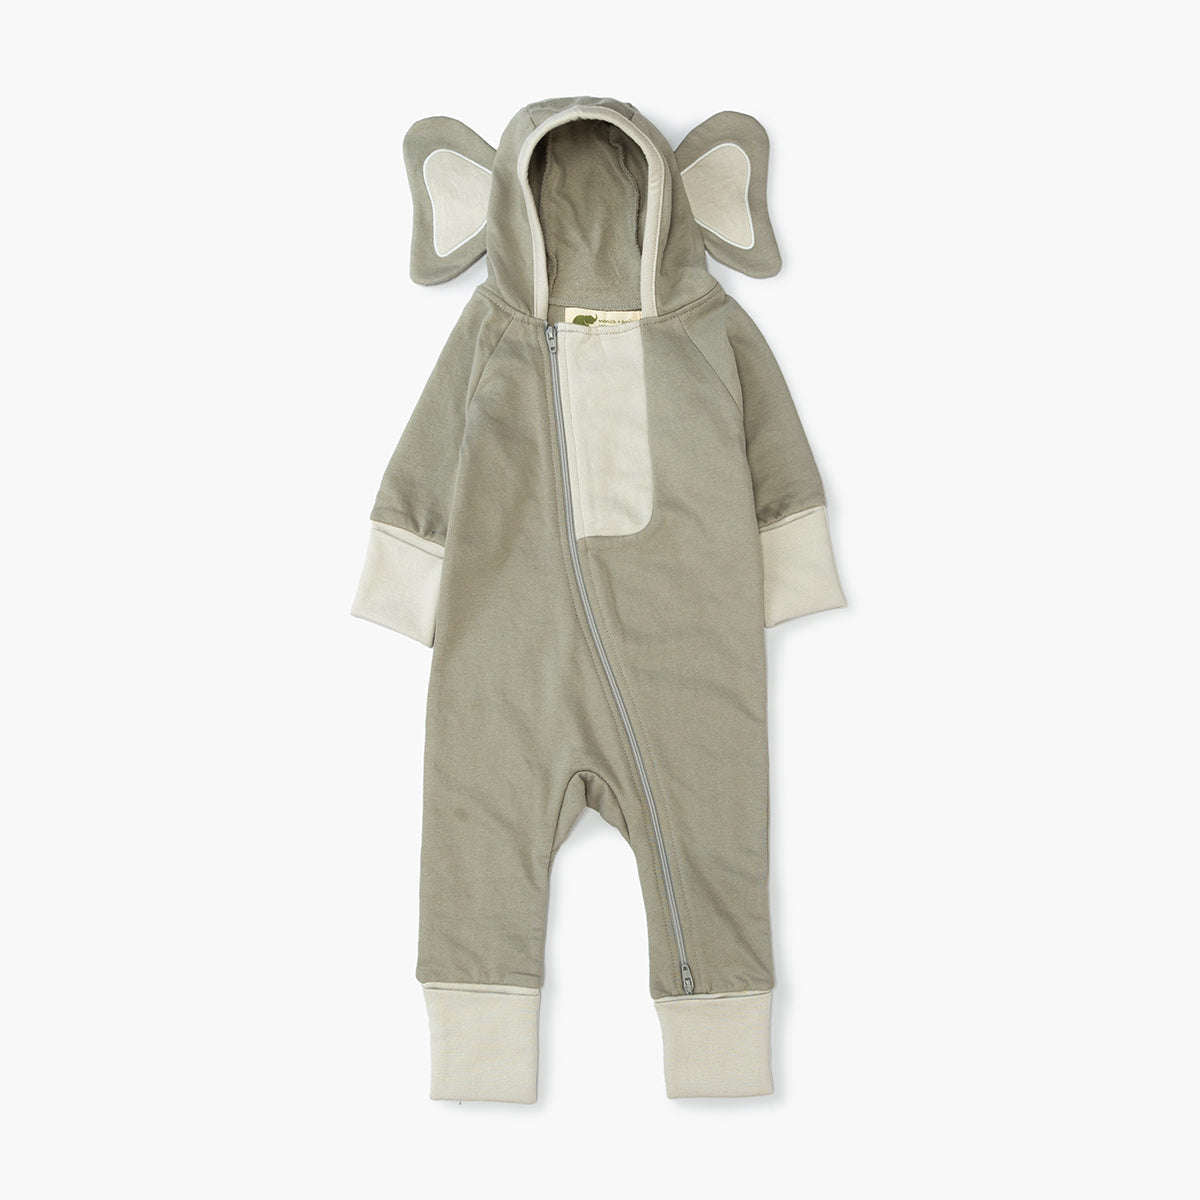 Grey Elephant Costume